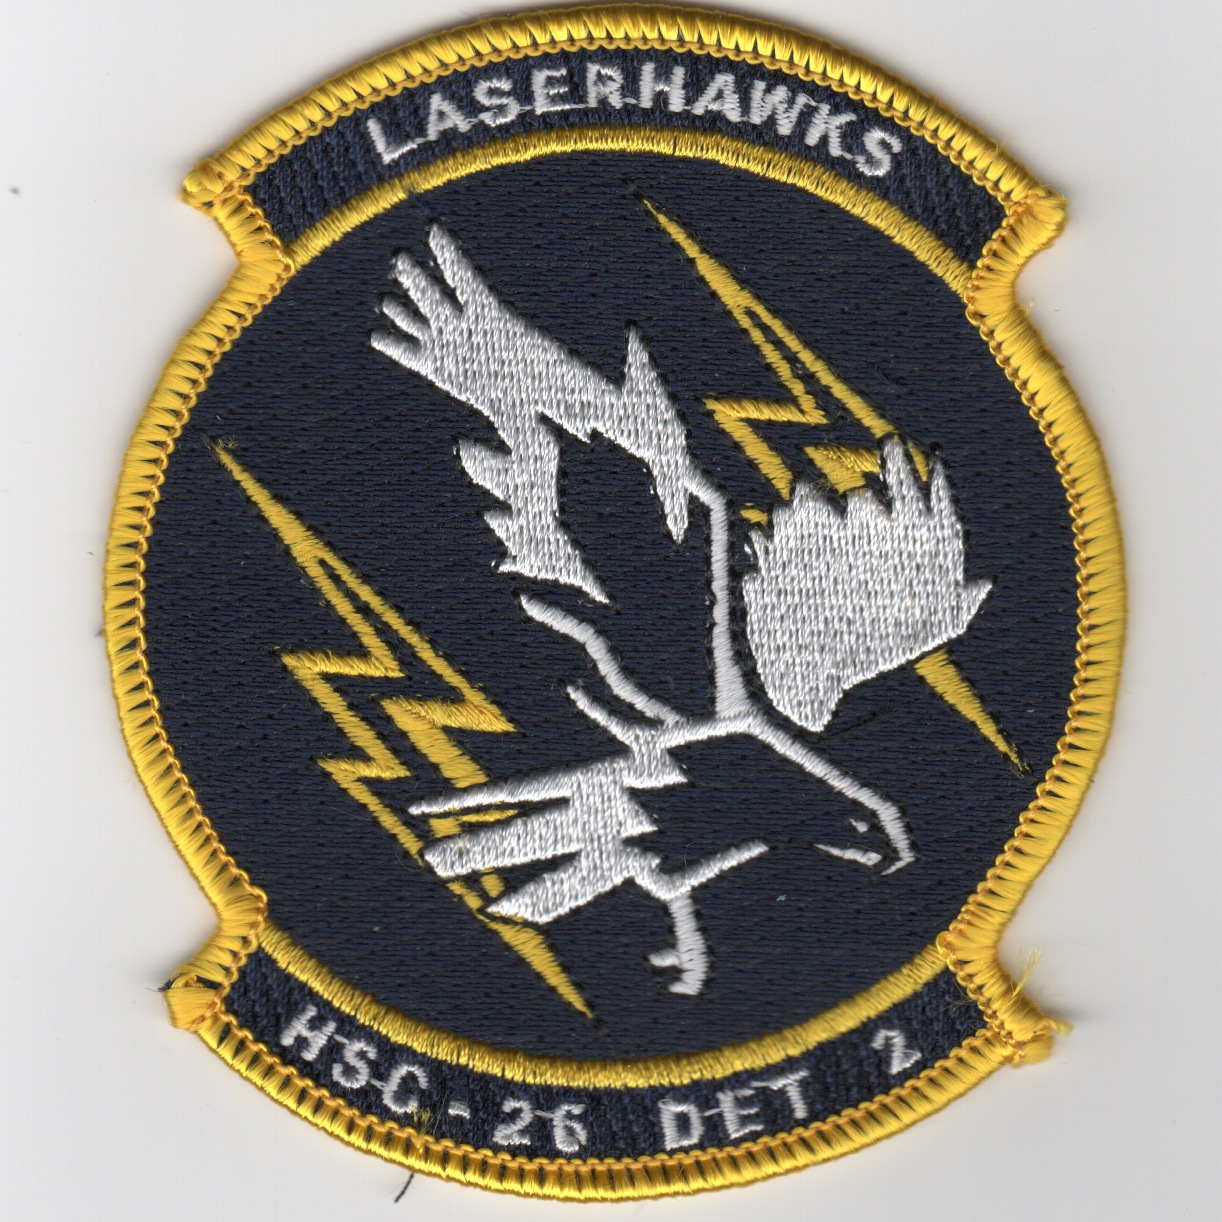 HSC-26 Det-2 'Laserhawks' Patch